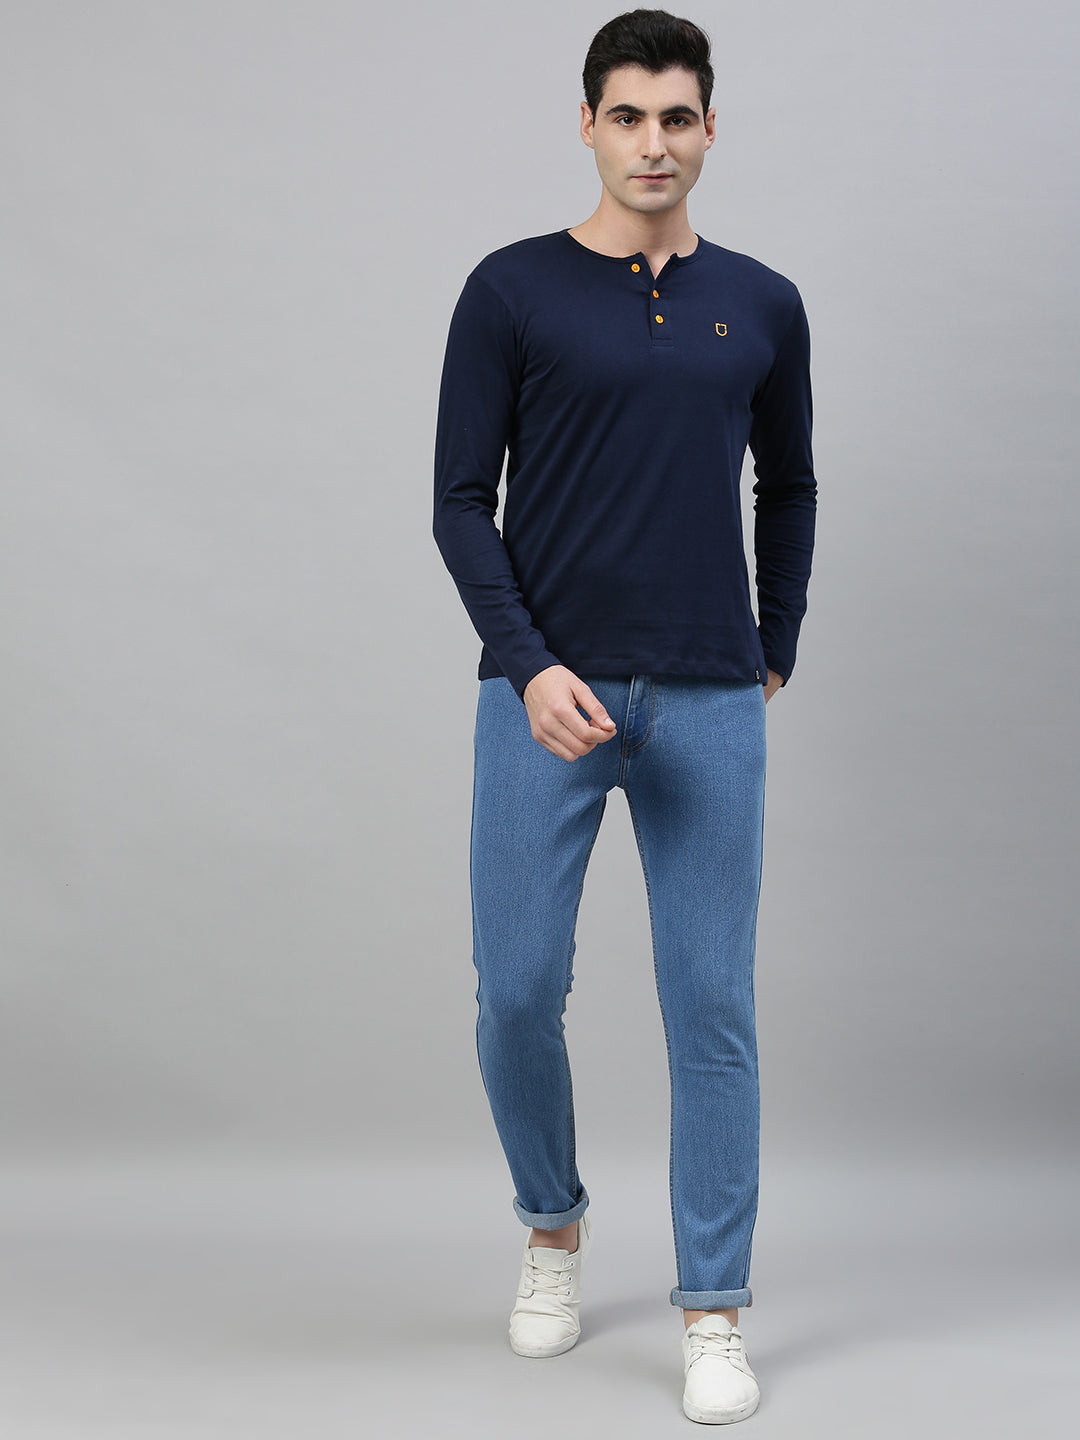 Urbano Fashion Men's Navy Blue Solid Henley Neck Slim Fit Cotton T-Shirt